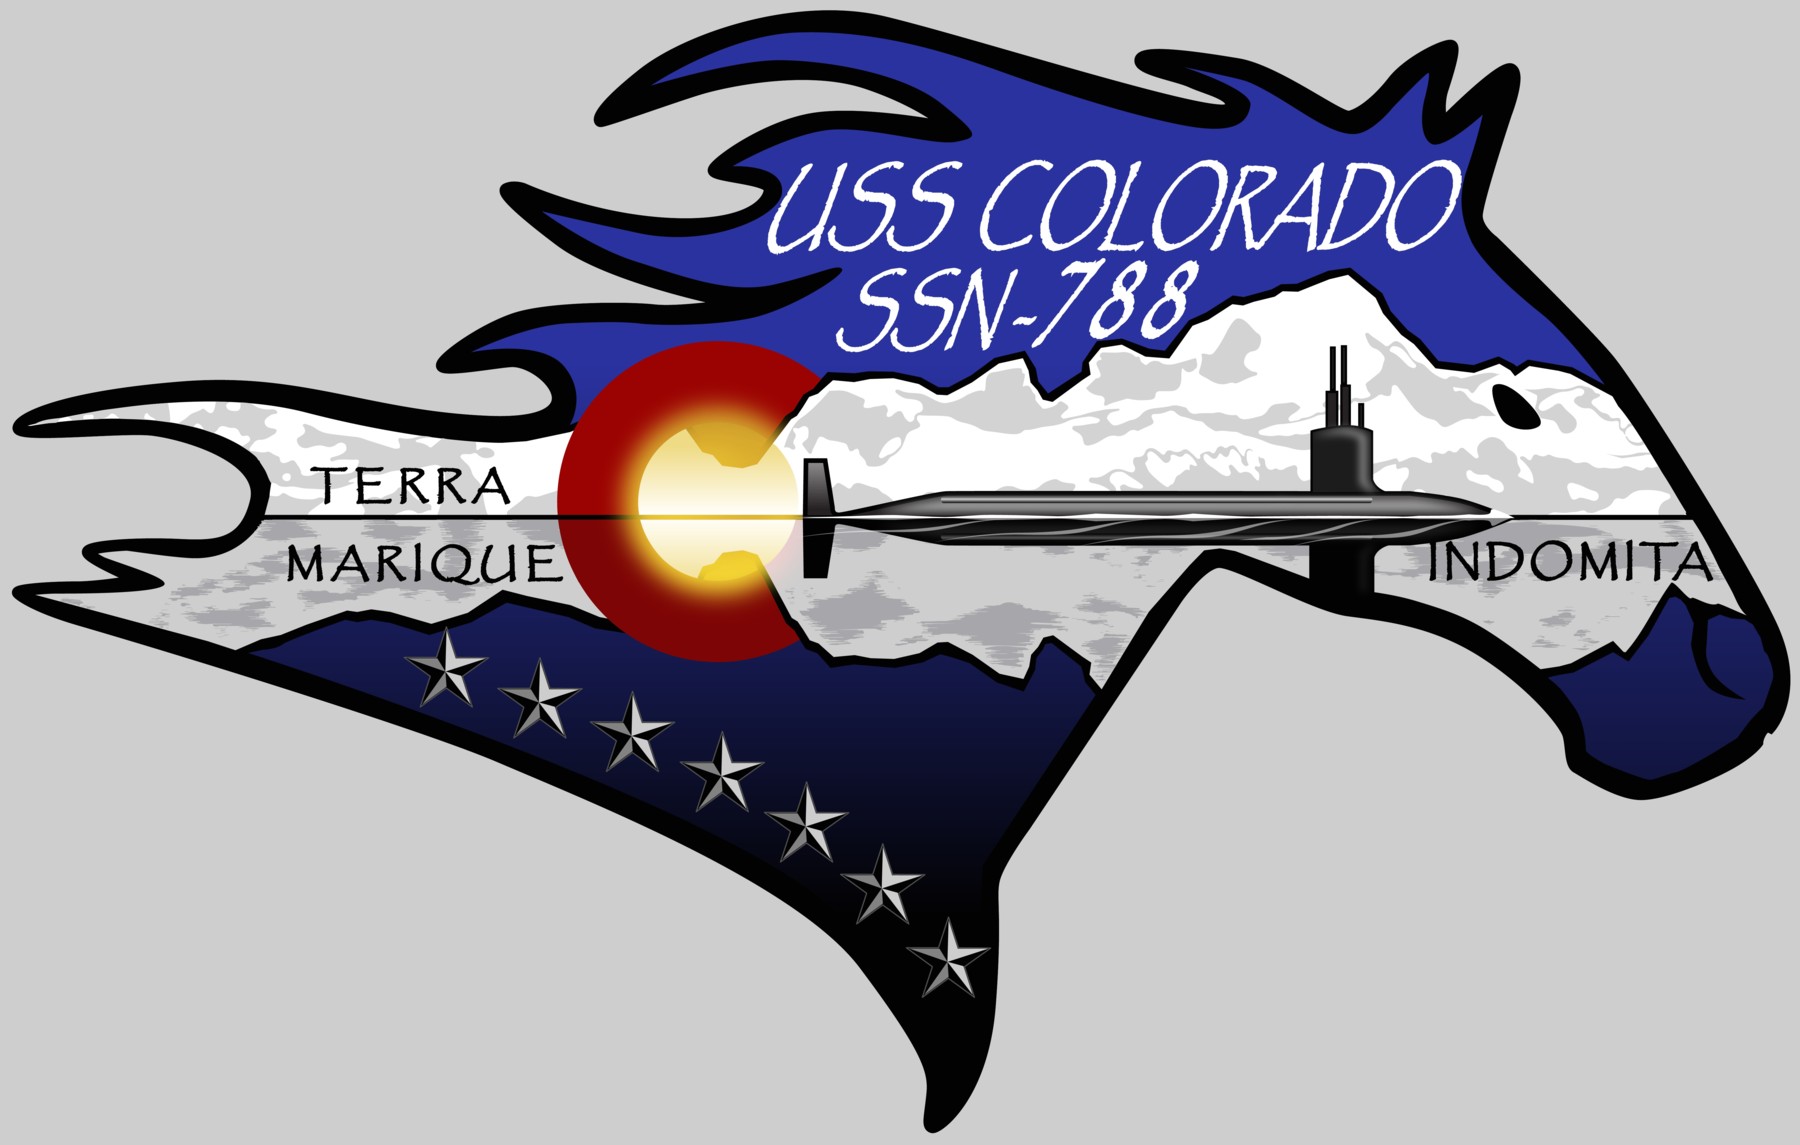 ssn-788 uss colorado insignia crest patch badge virginia class attack submarine us navy 02c